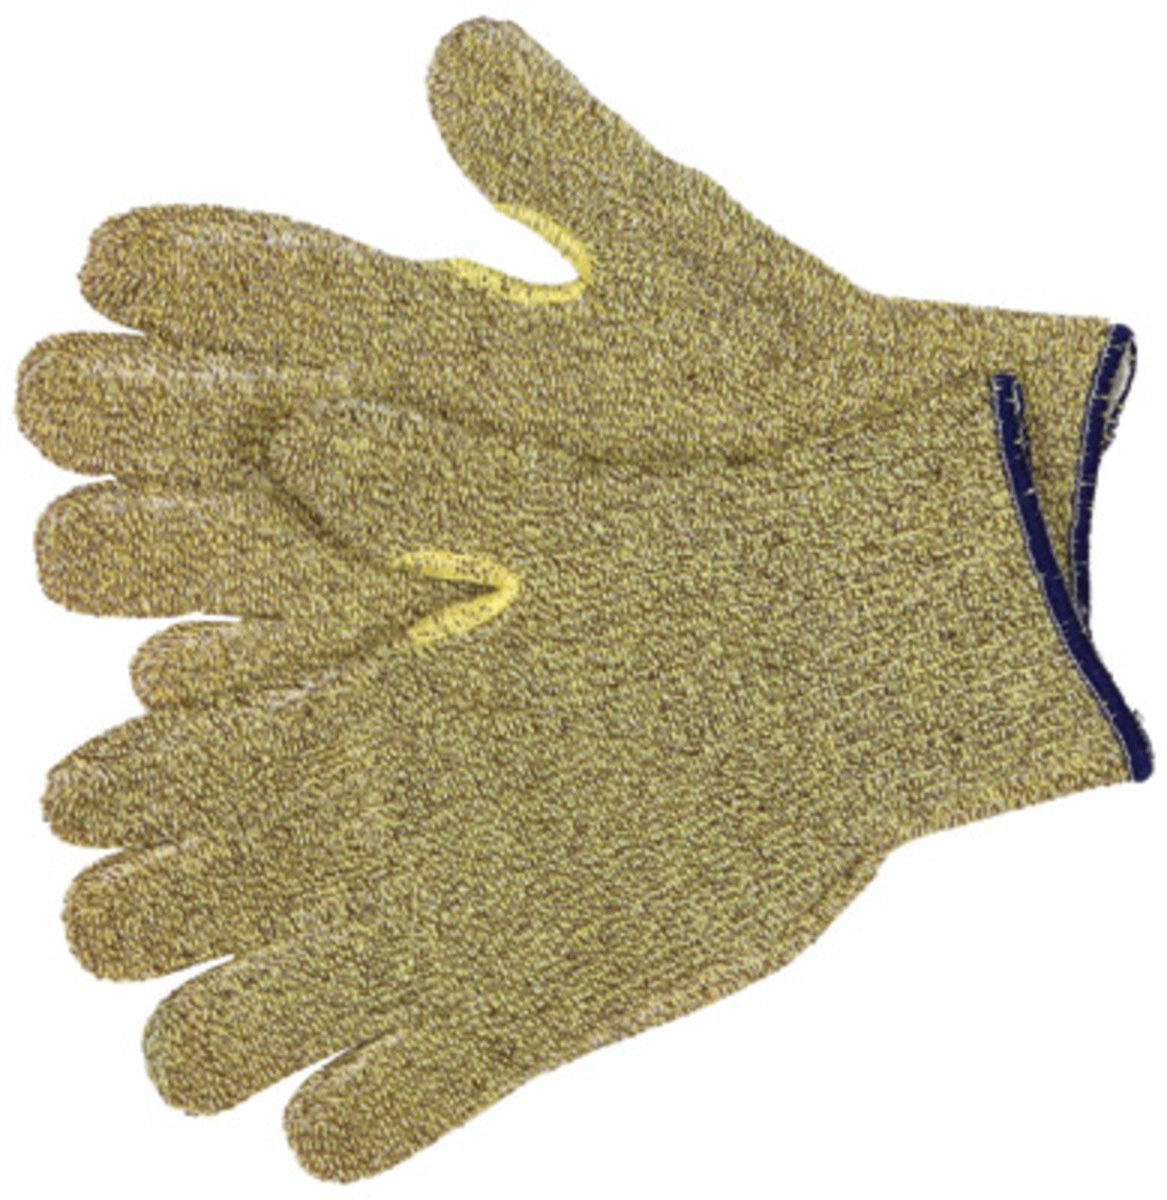 Memphis Glove Medium Brown And Yellow 7 Gauge Regular Weight Kevlar® Cotton Blend Terry Cloth Heat Resistant Gloves With Reinfor